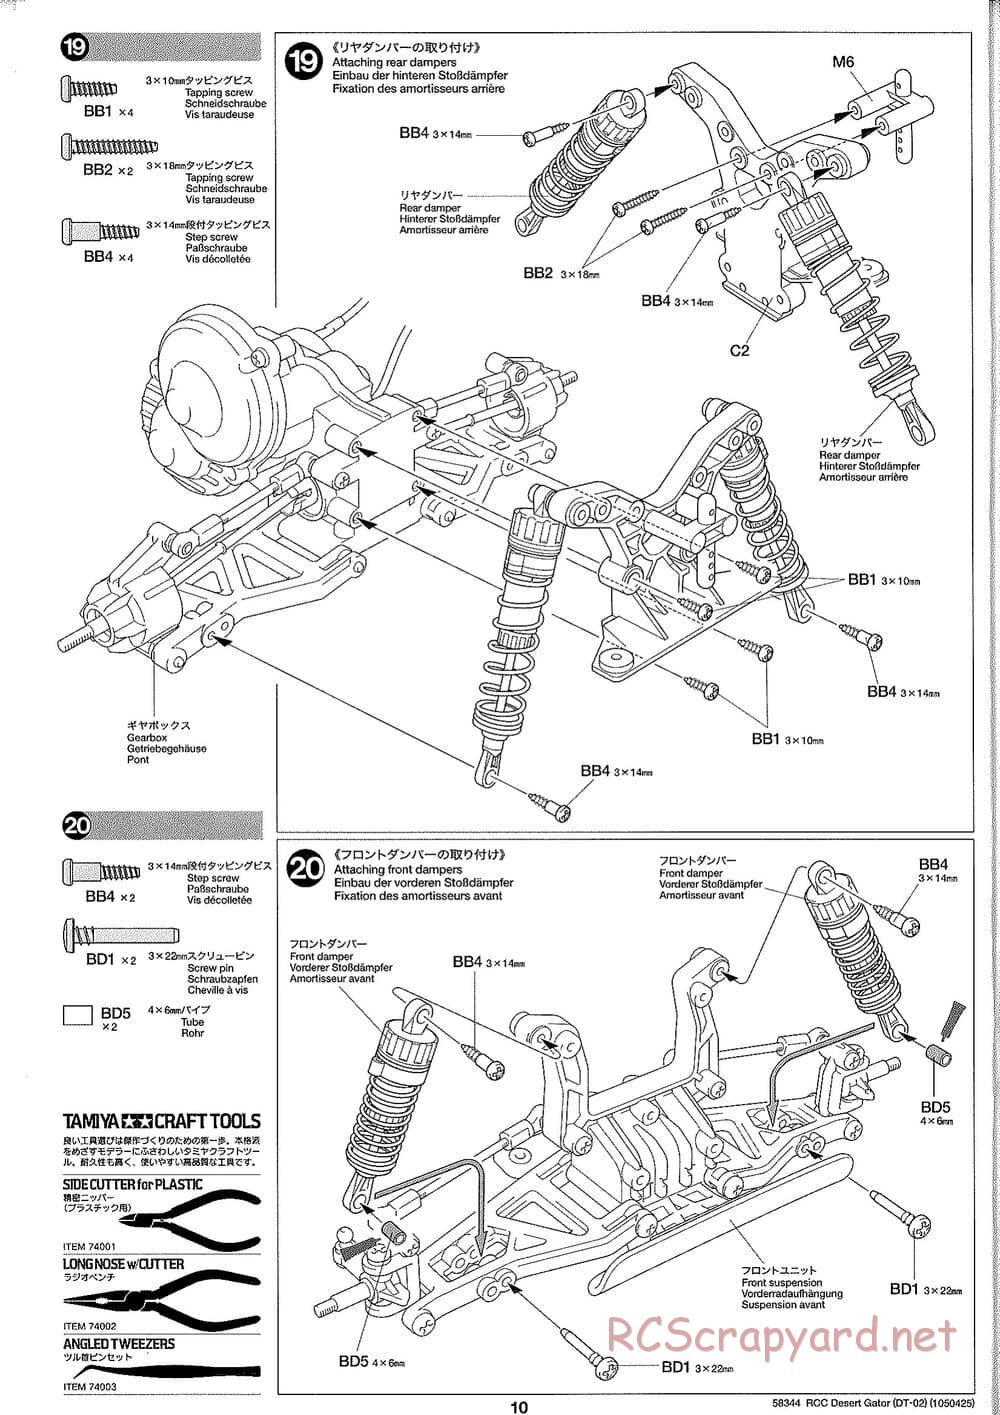 Tamiya - Desert Gator Chassis - Manual - Page 10